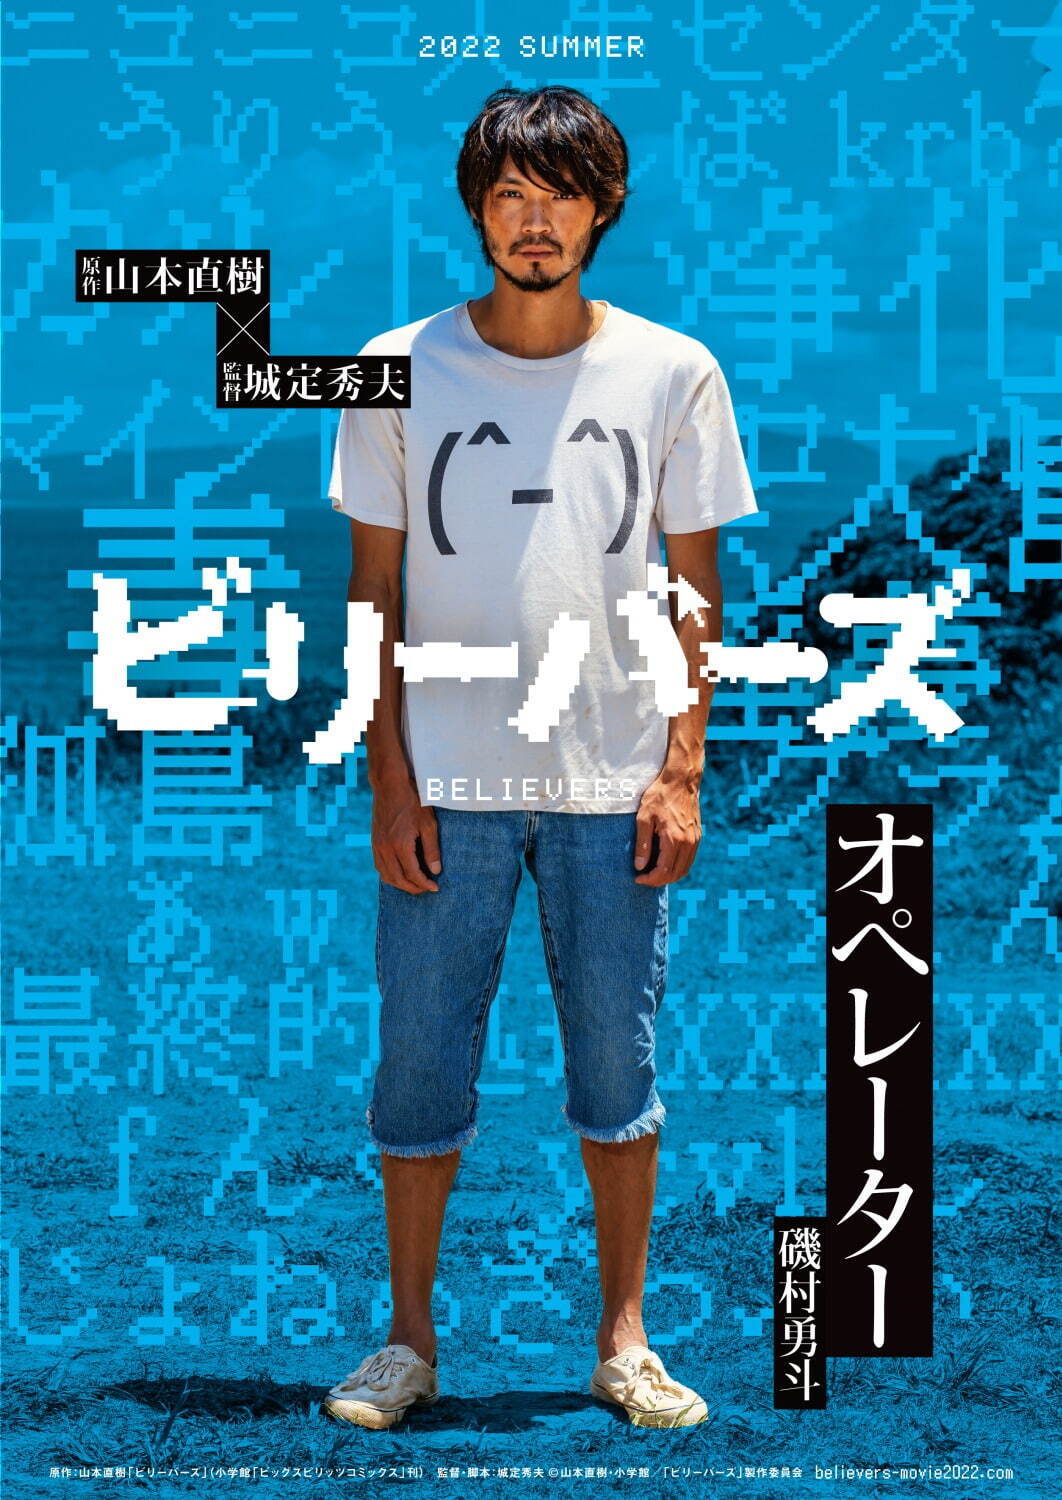 Trailer and poster for movie “Koi wa Hikari”